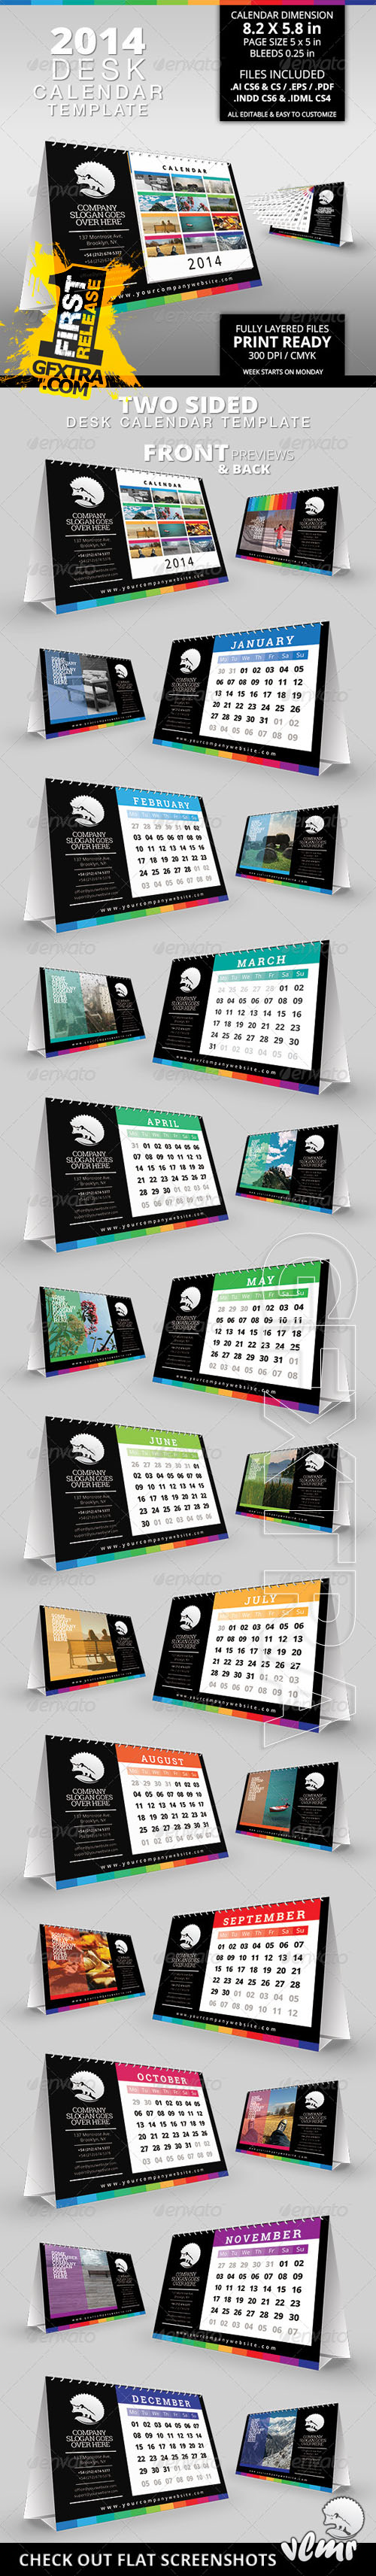 GraphicRiver - 2014 Desk Calendar Template 